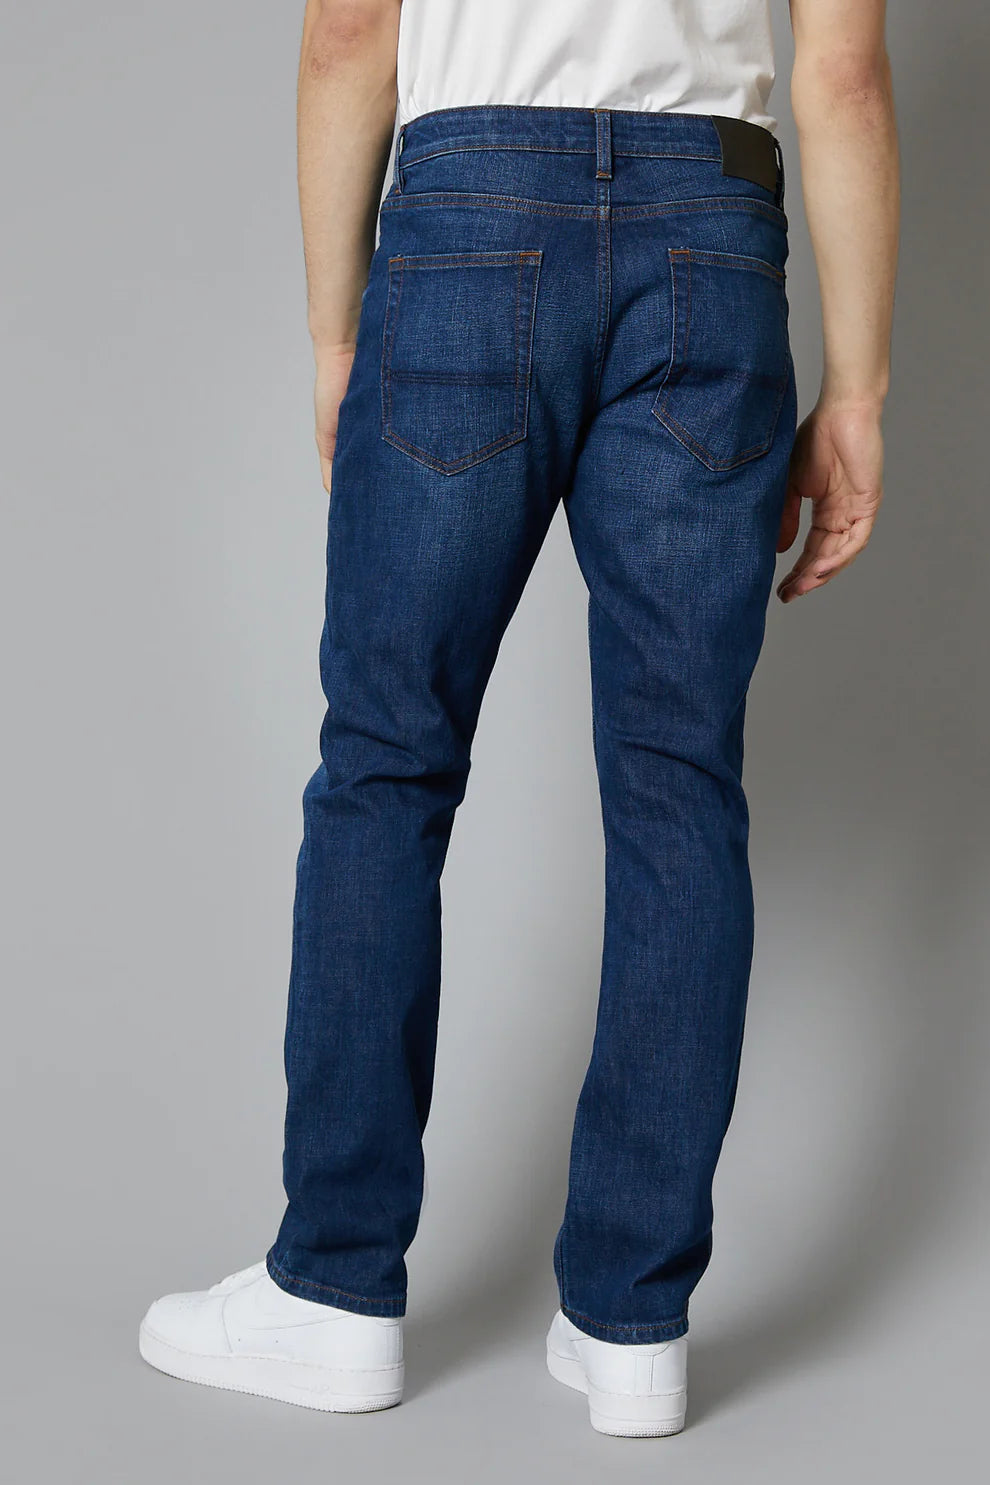 DML "Alaska" Straight Jeans in Mid Blue